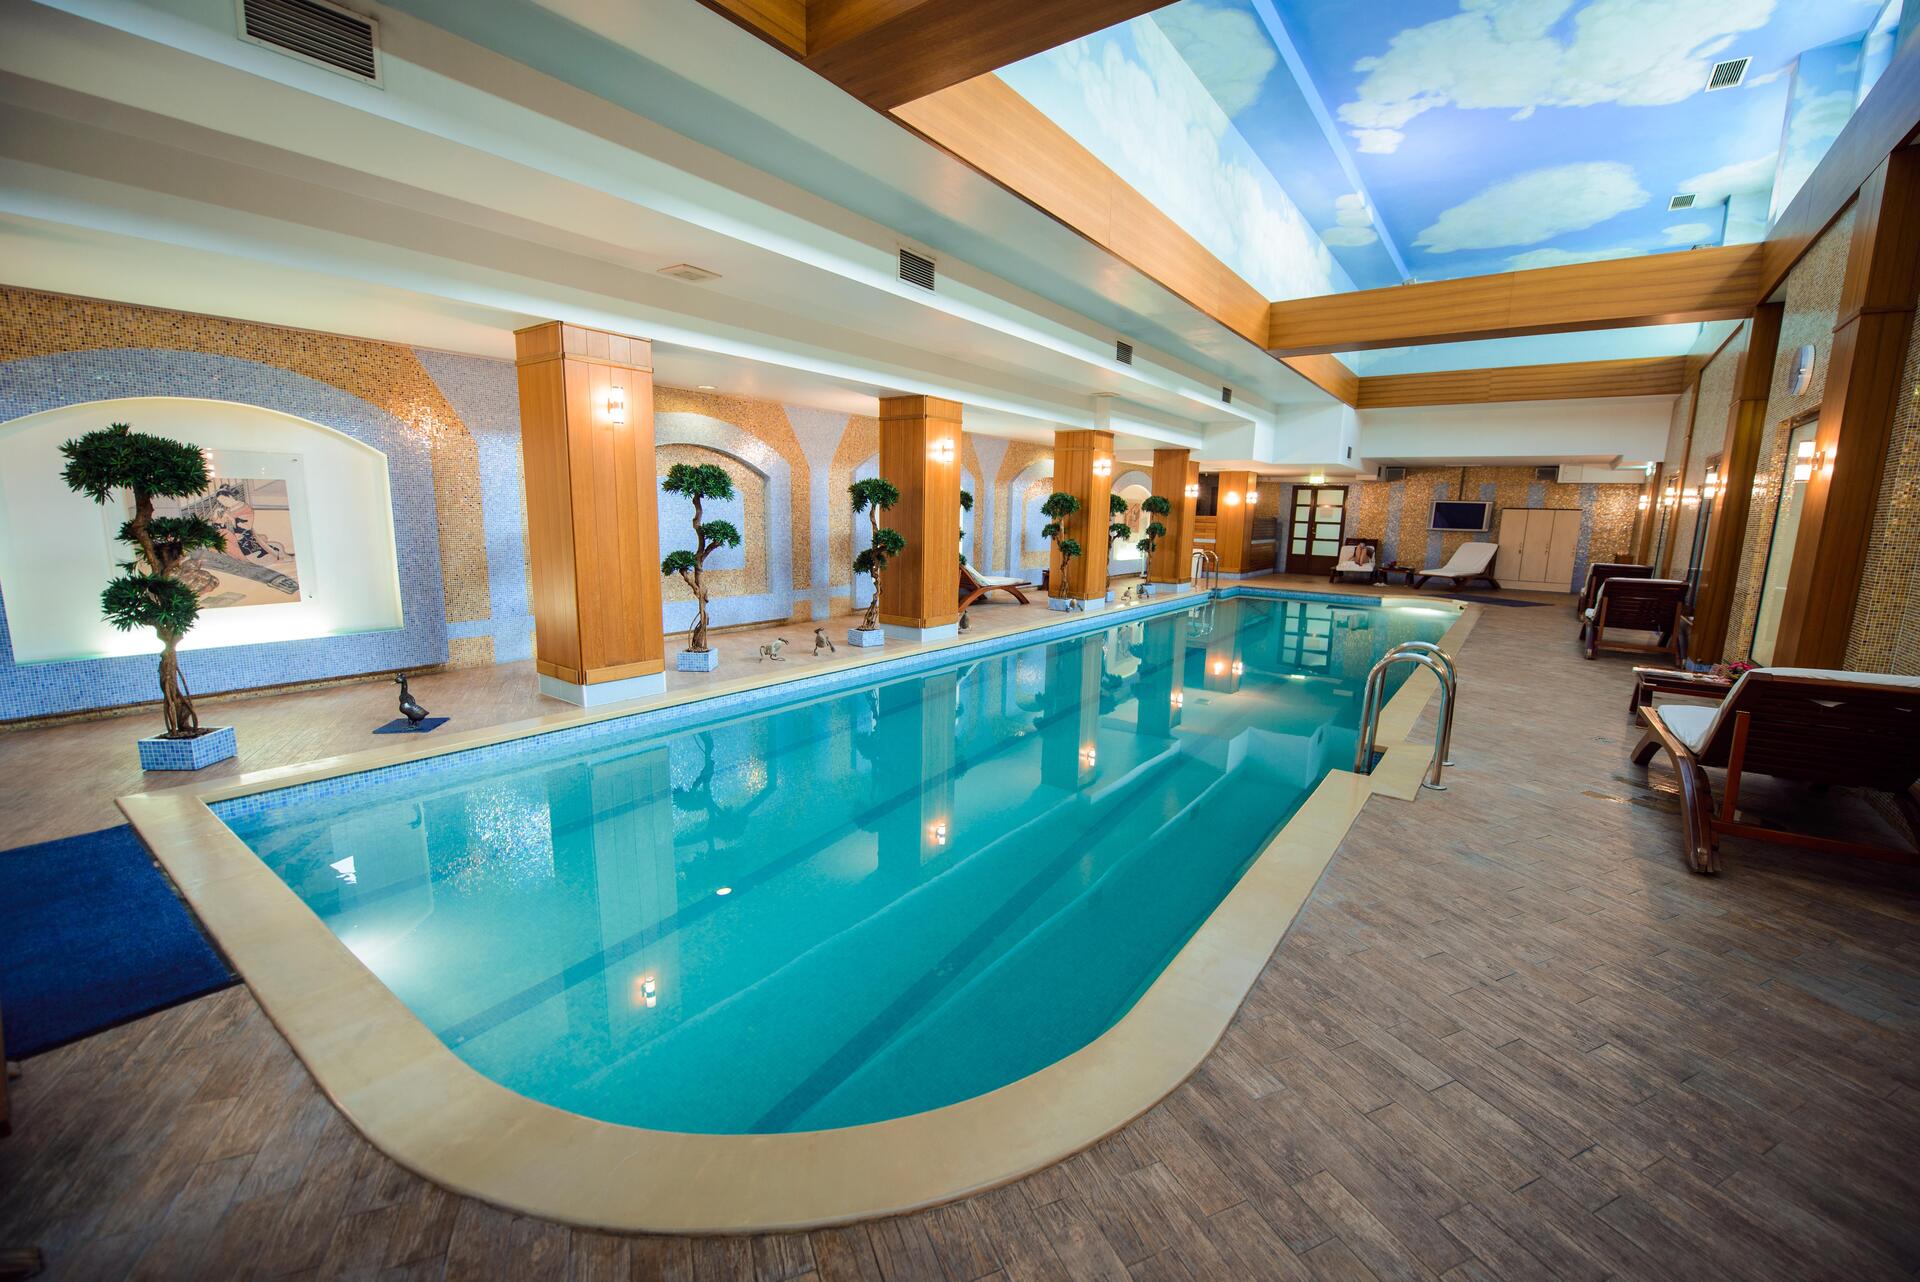 Ambassador Hotel: Pool